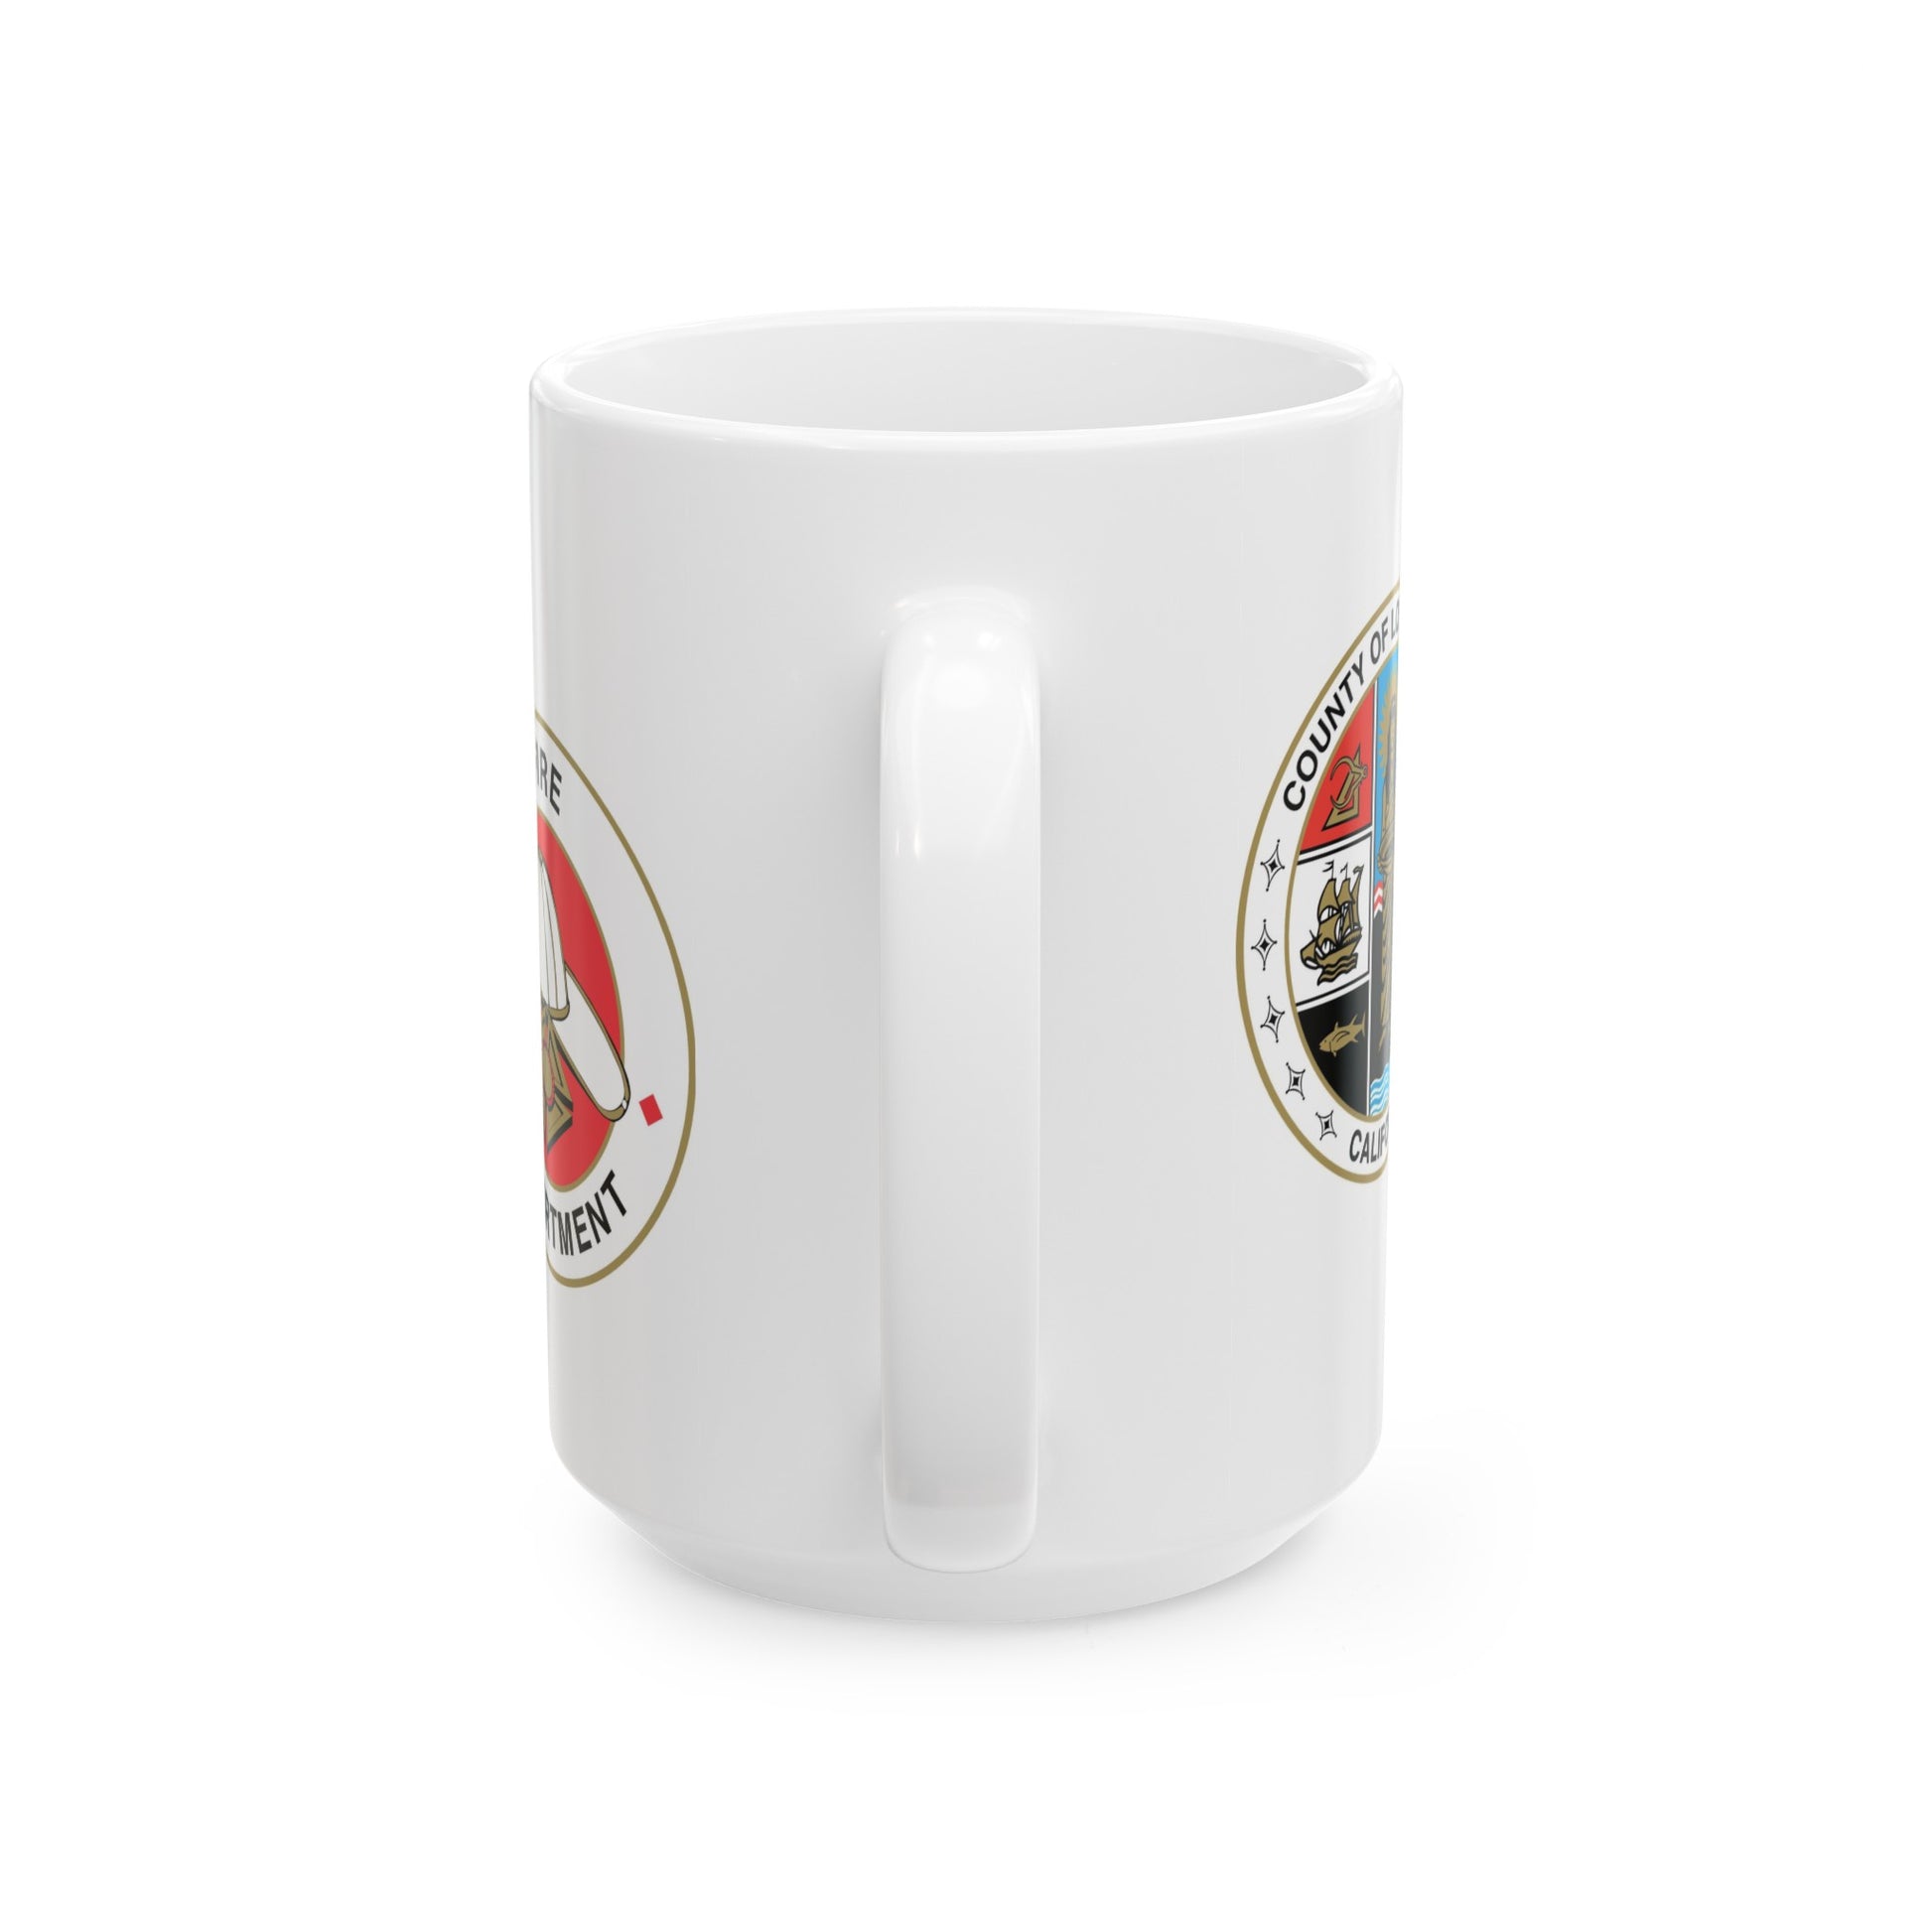 Los Angeles County Fire Department Coffee Mug - Double Sided Print White Ceramic Mug 15oz by TheGlassyLass.com